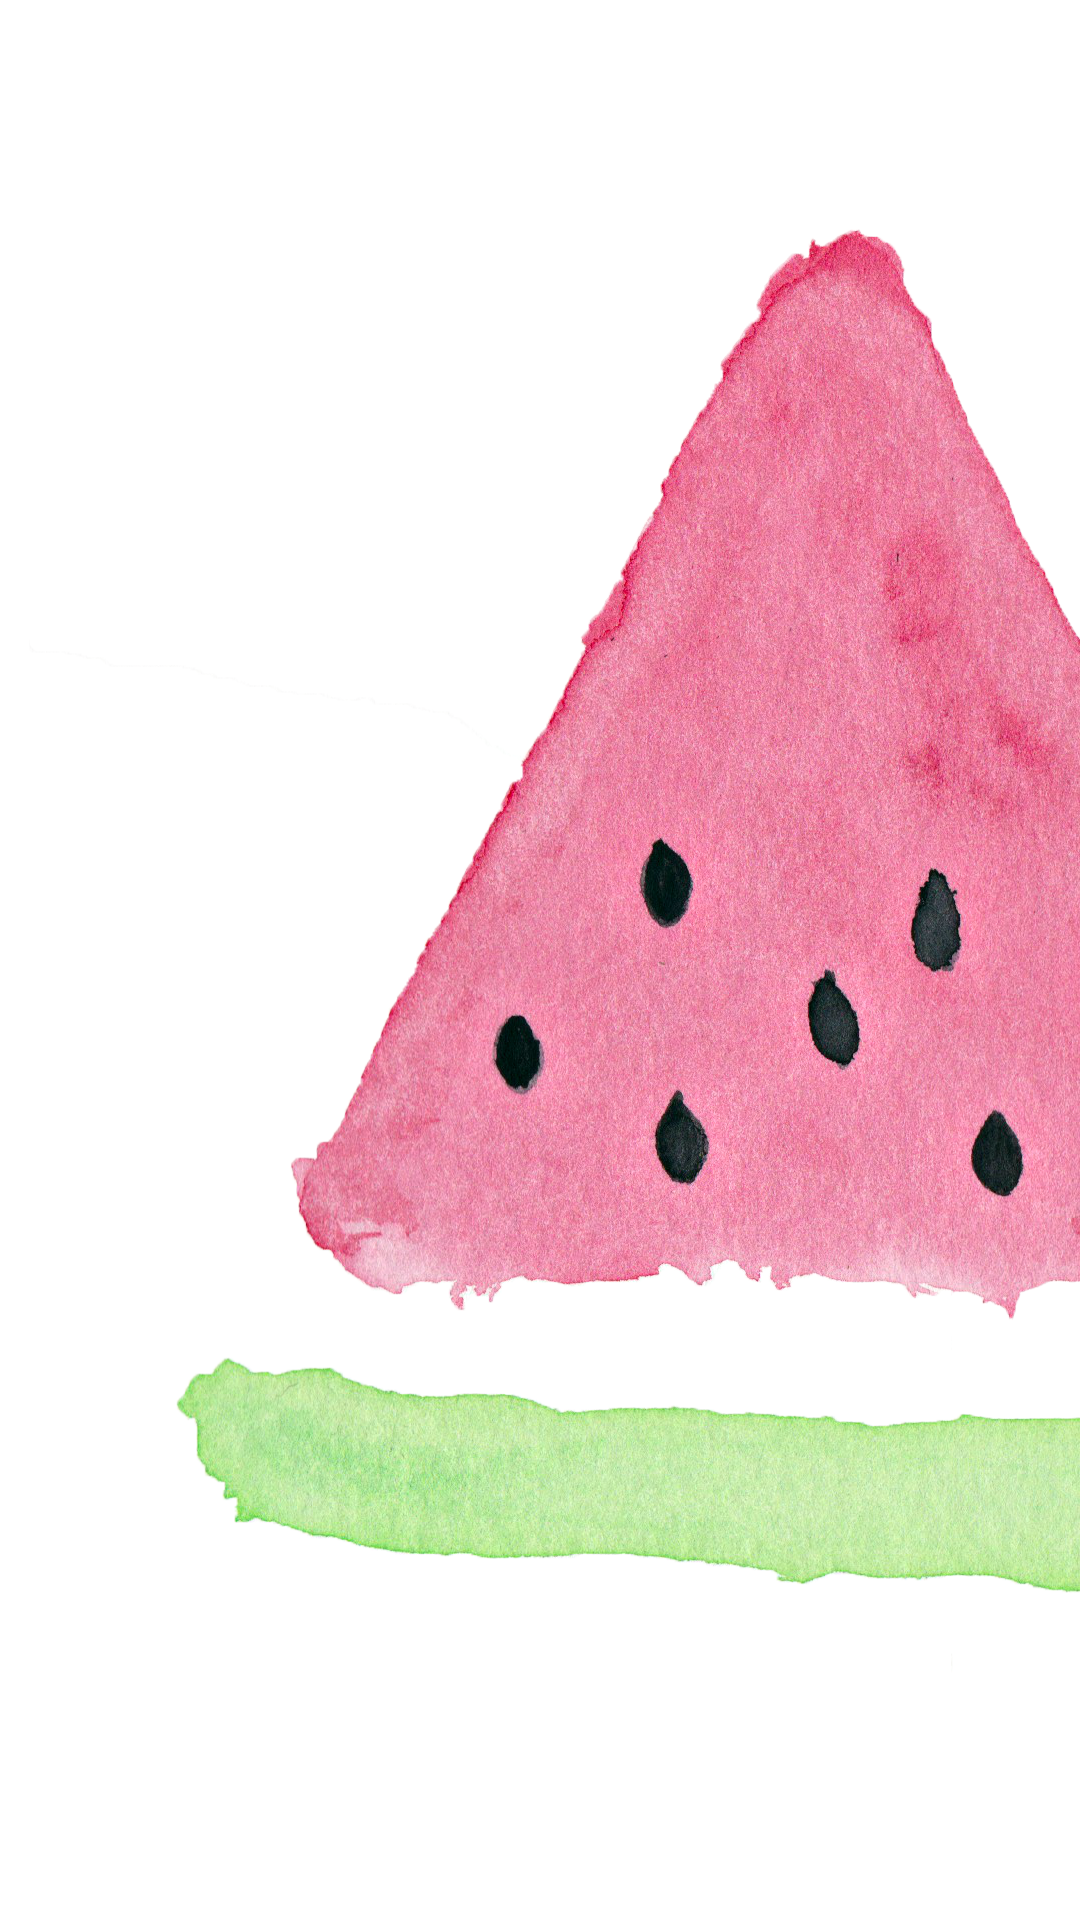 Watermelon Watercolour Simple iPhone Wallpaper Lock Screen. Wallpaper iphone, Semangka, Desain pamflet